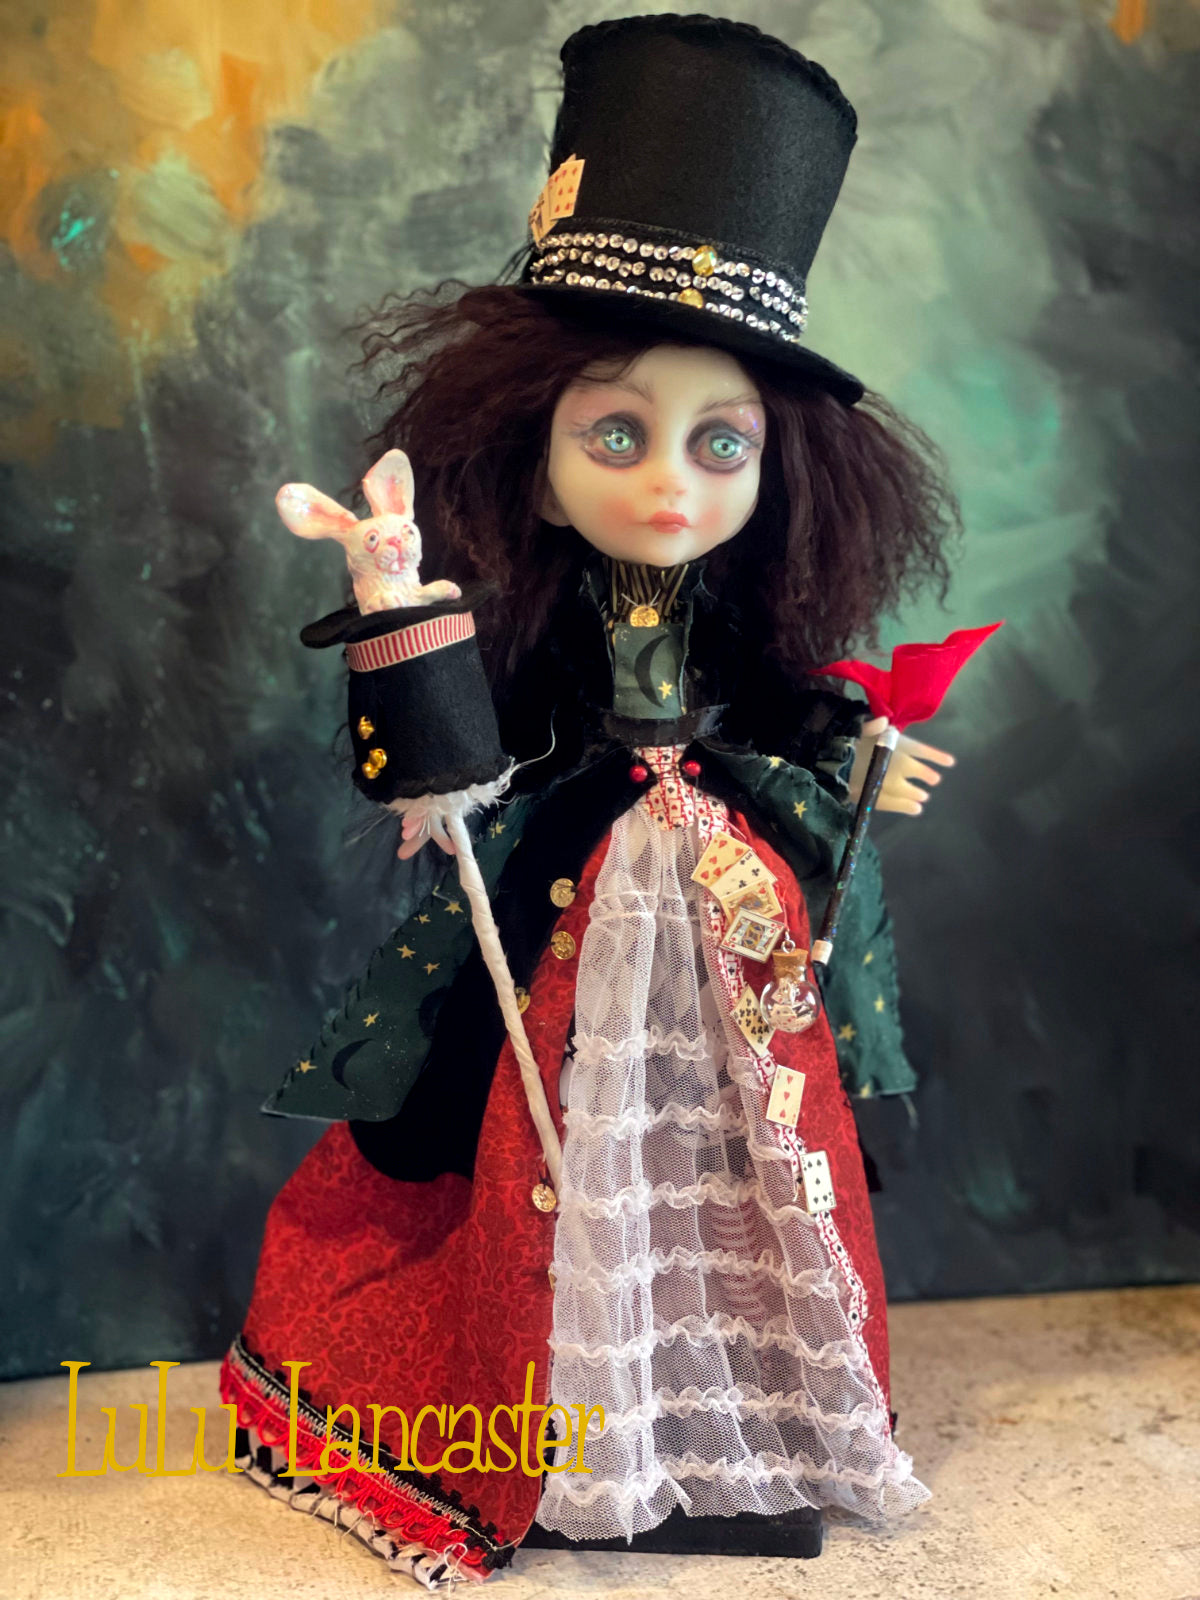 The Bewildering Bellaine the Magician Original LuLu Lancaster Art Doll